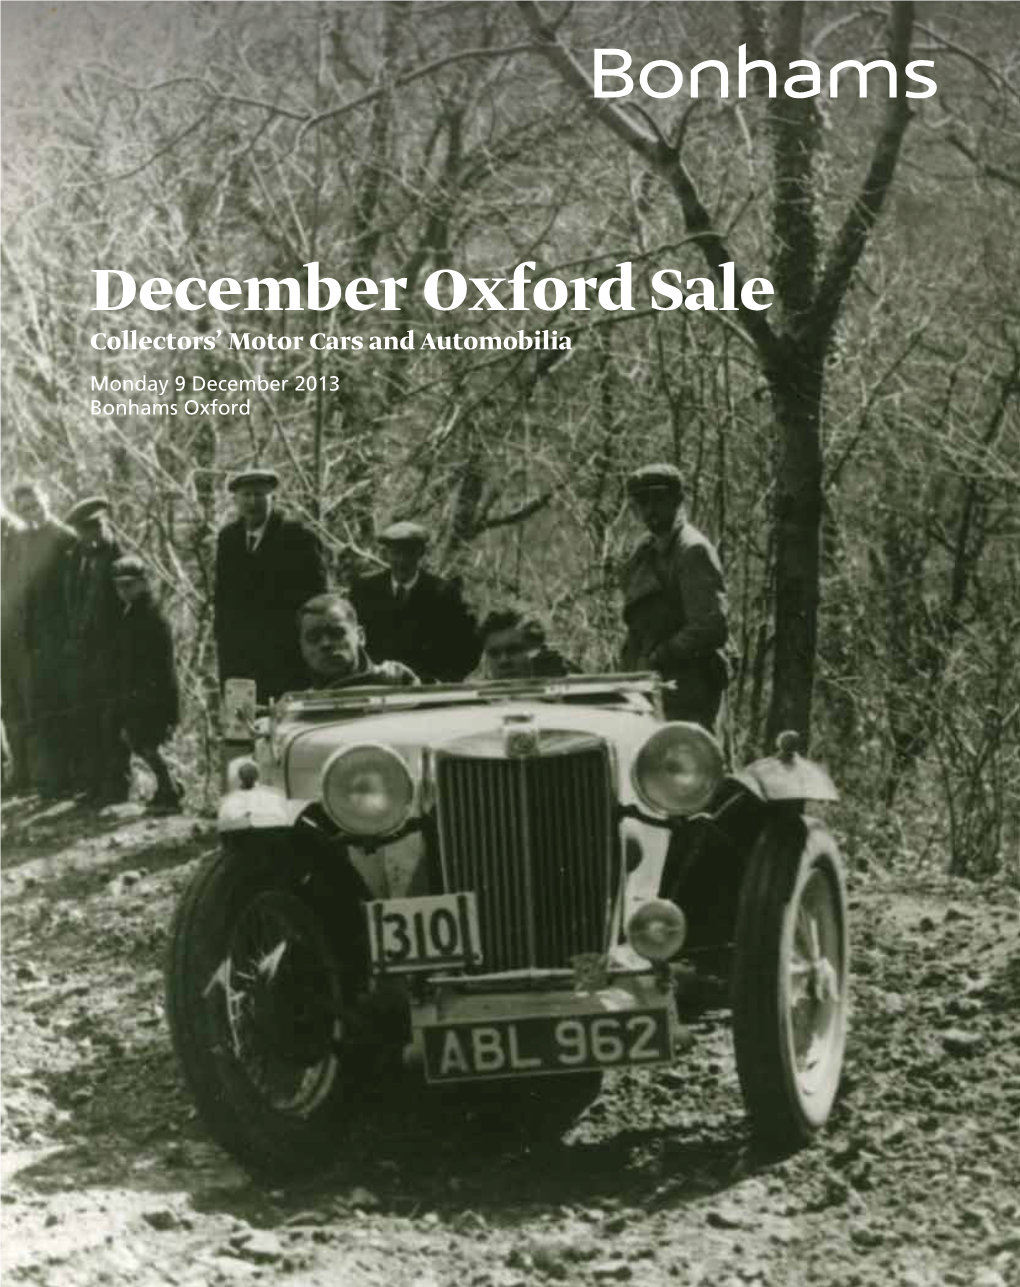 December Oxford Sale Collectors’ Motor Cars and Automobilia Monday 9 December 2013 Bonhams Oxford